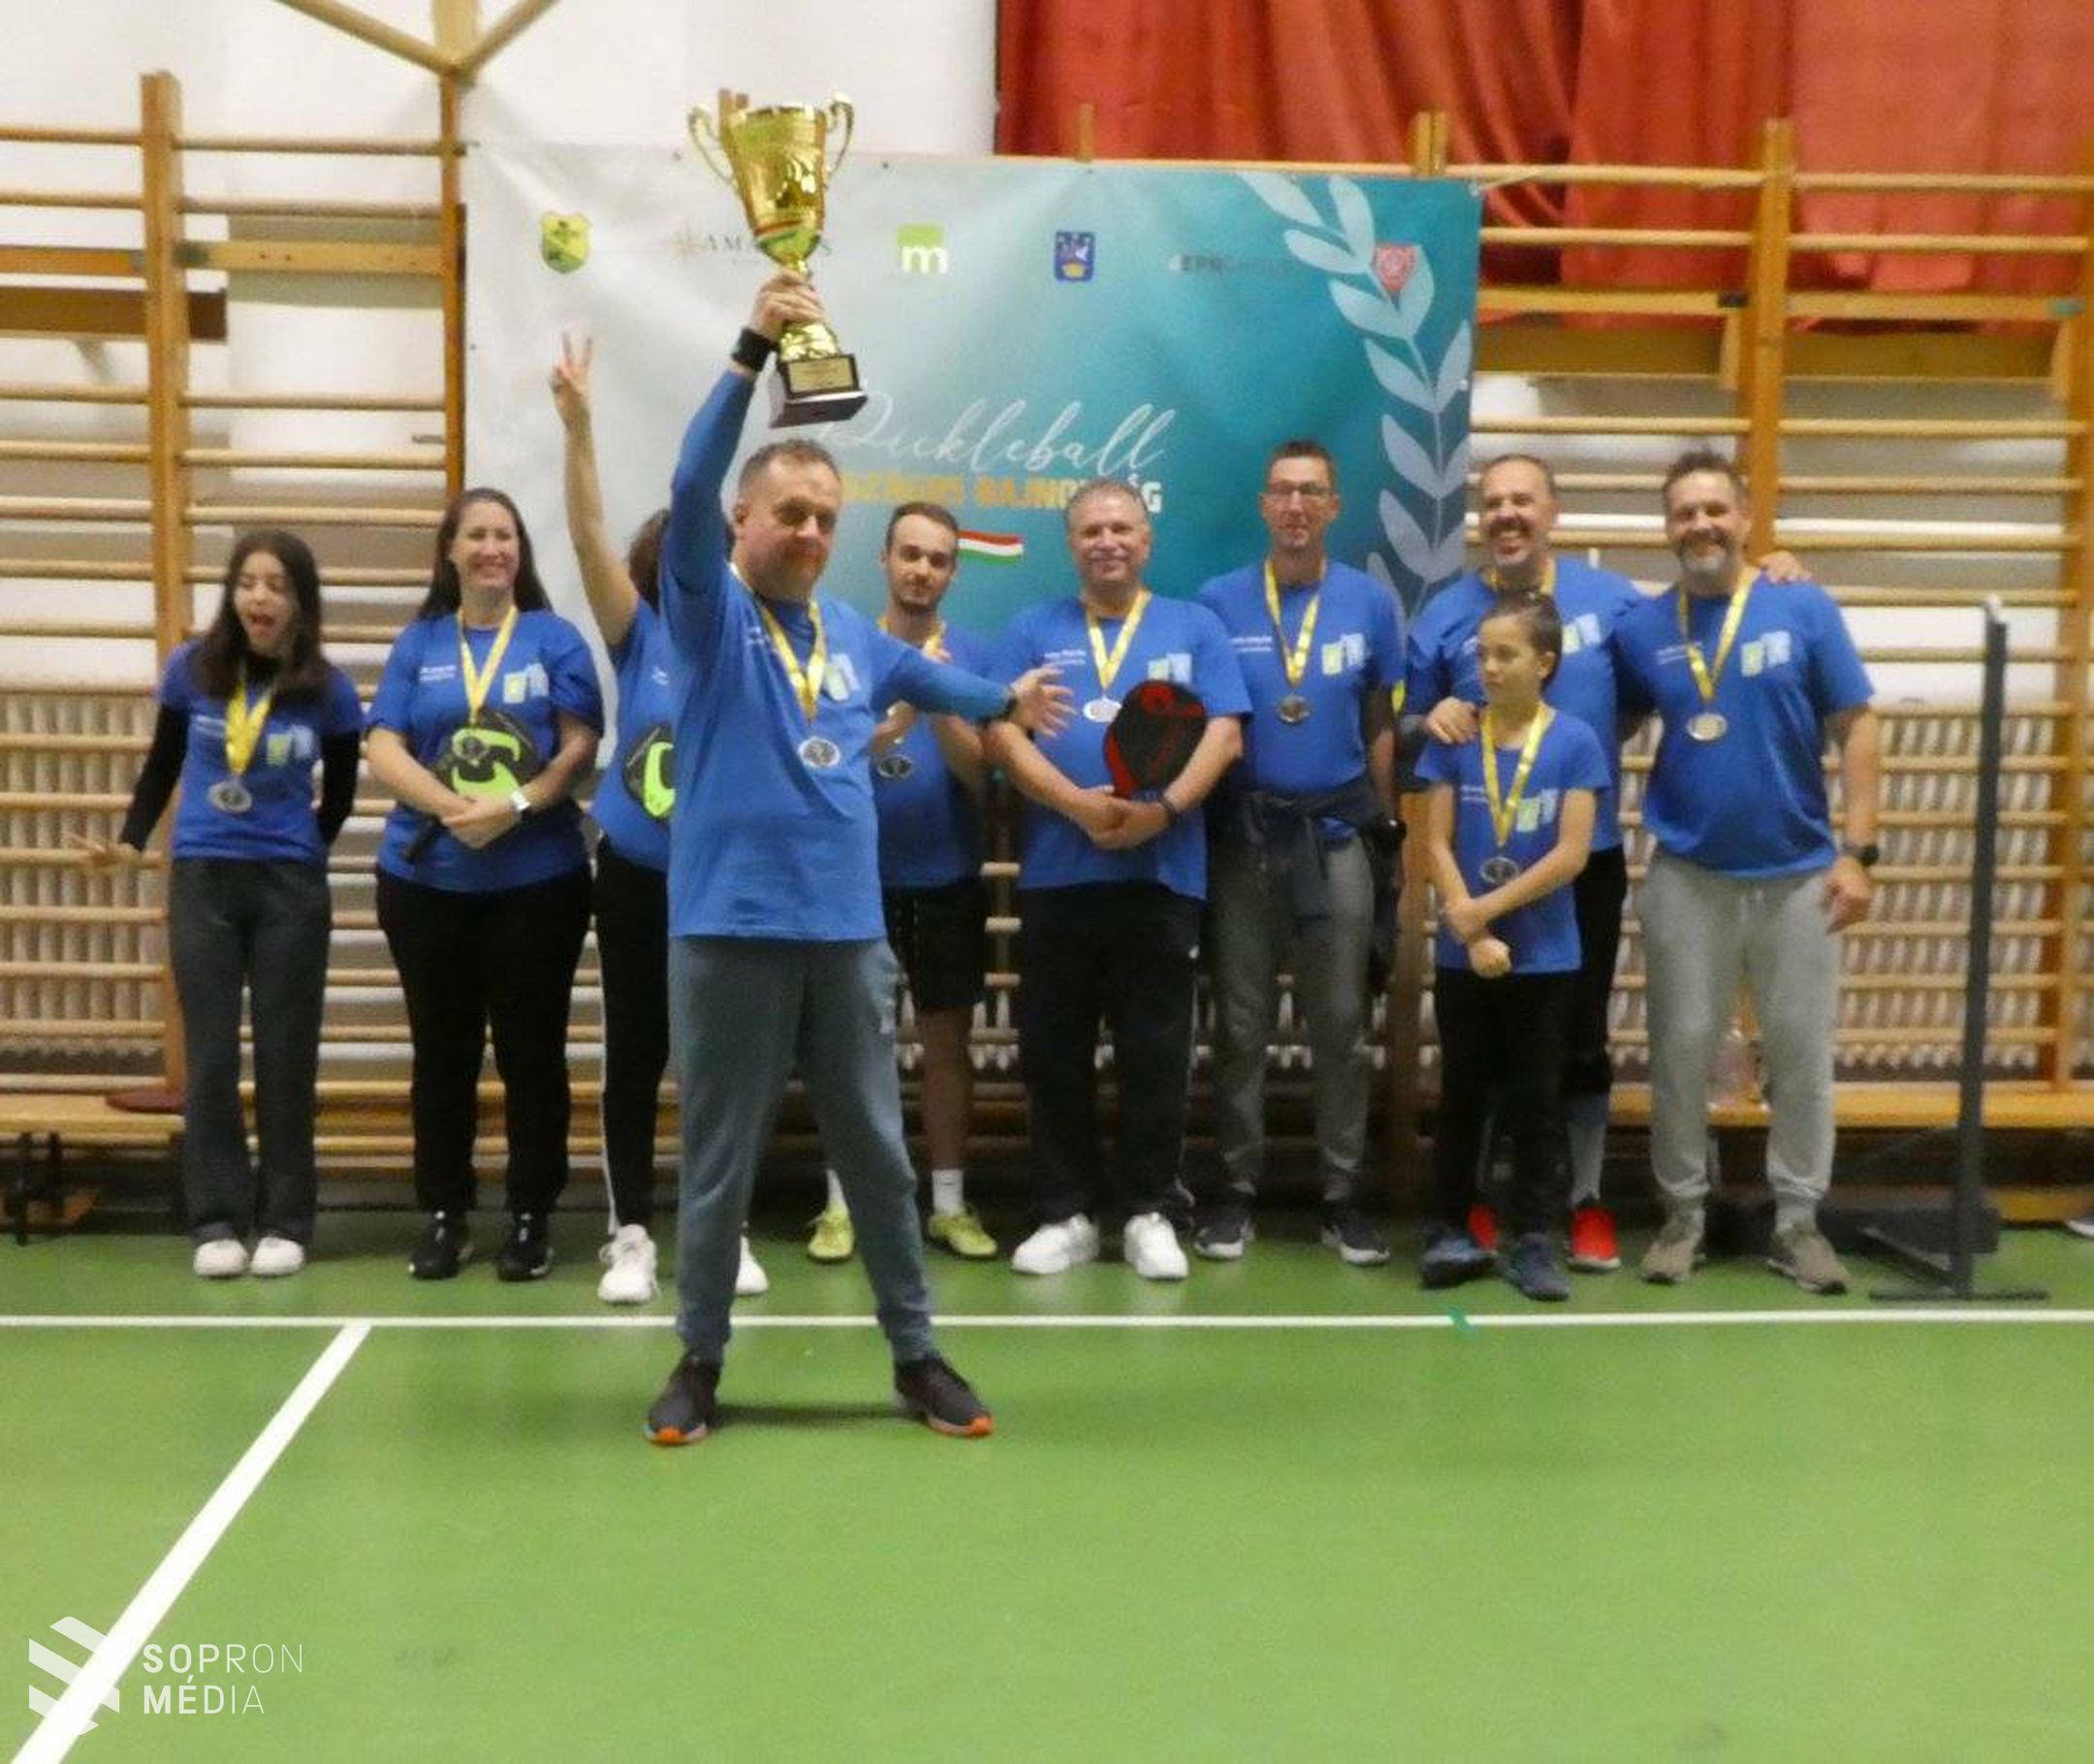 Magyar bajnok a soproni pickleballcsapat